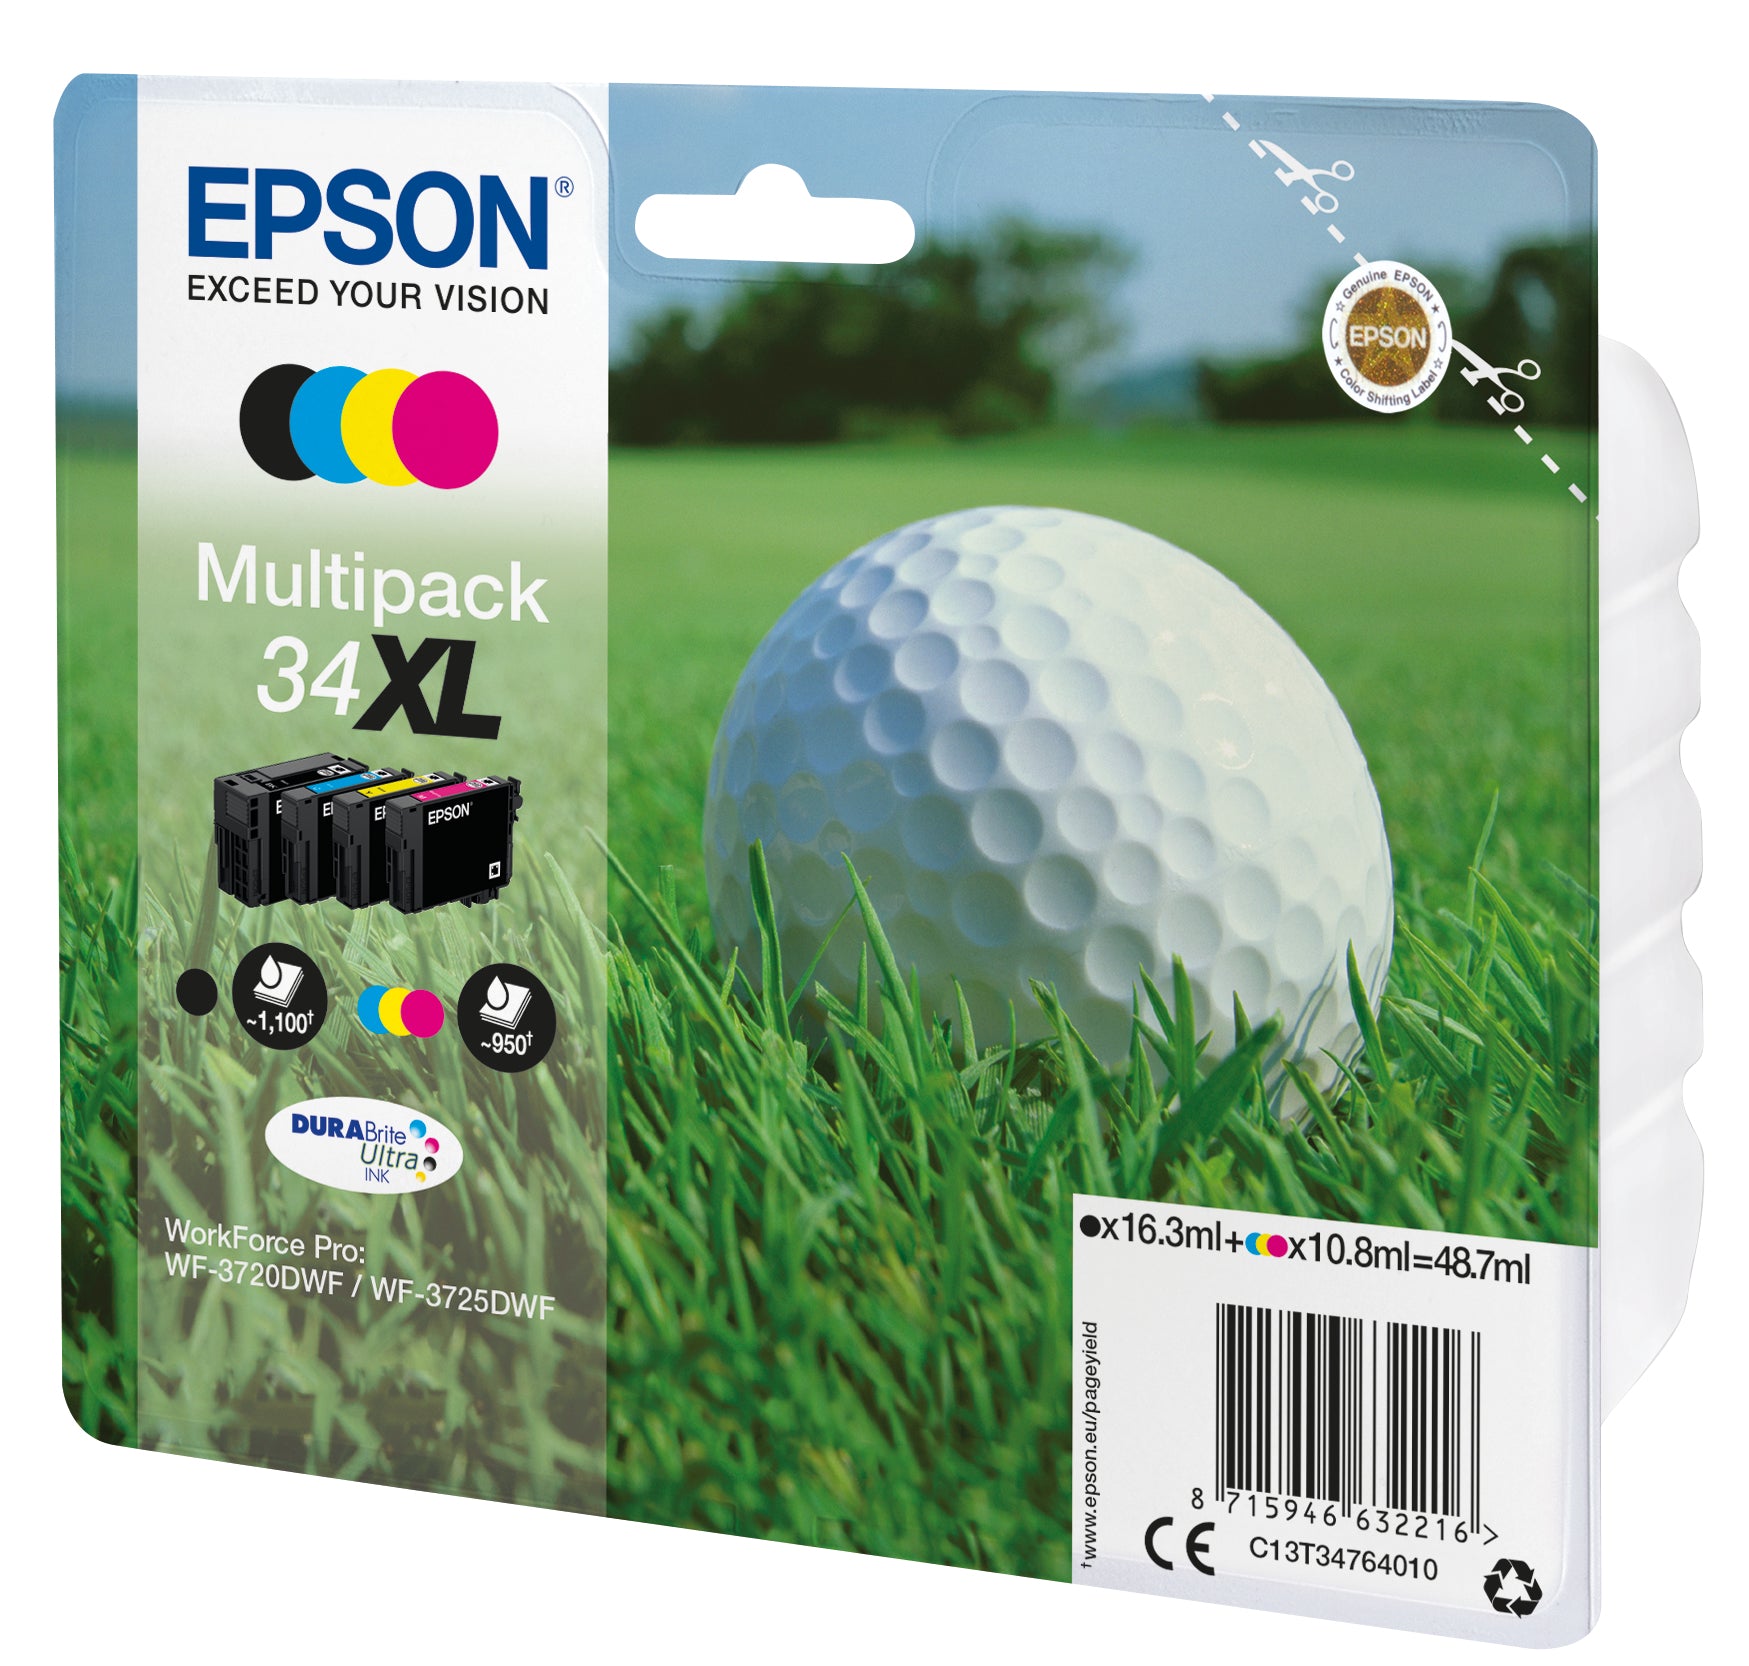 Epson C13T34764010/34XL Ink cartridge multi pack Bk,C,M,Y high-capacity 16,3ml + 3x10,8ml Pack=4 for Epson WF-3720